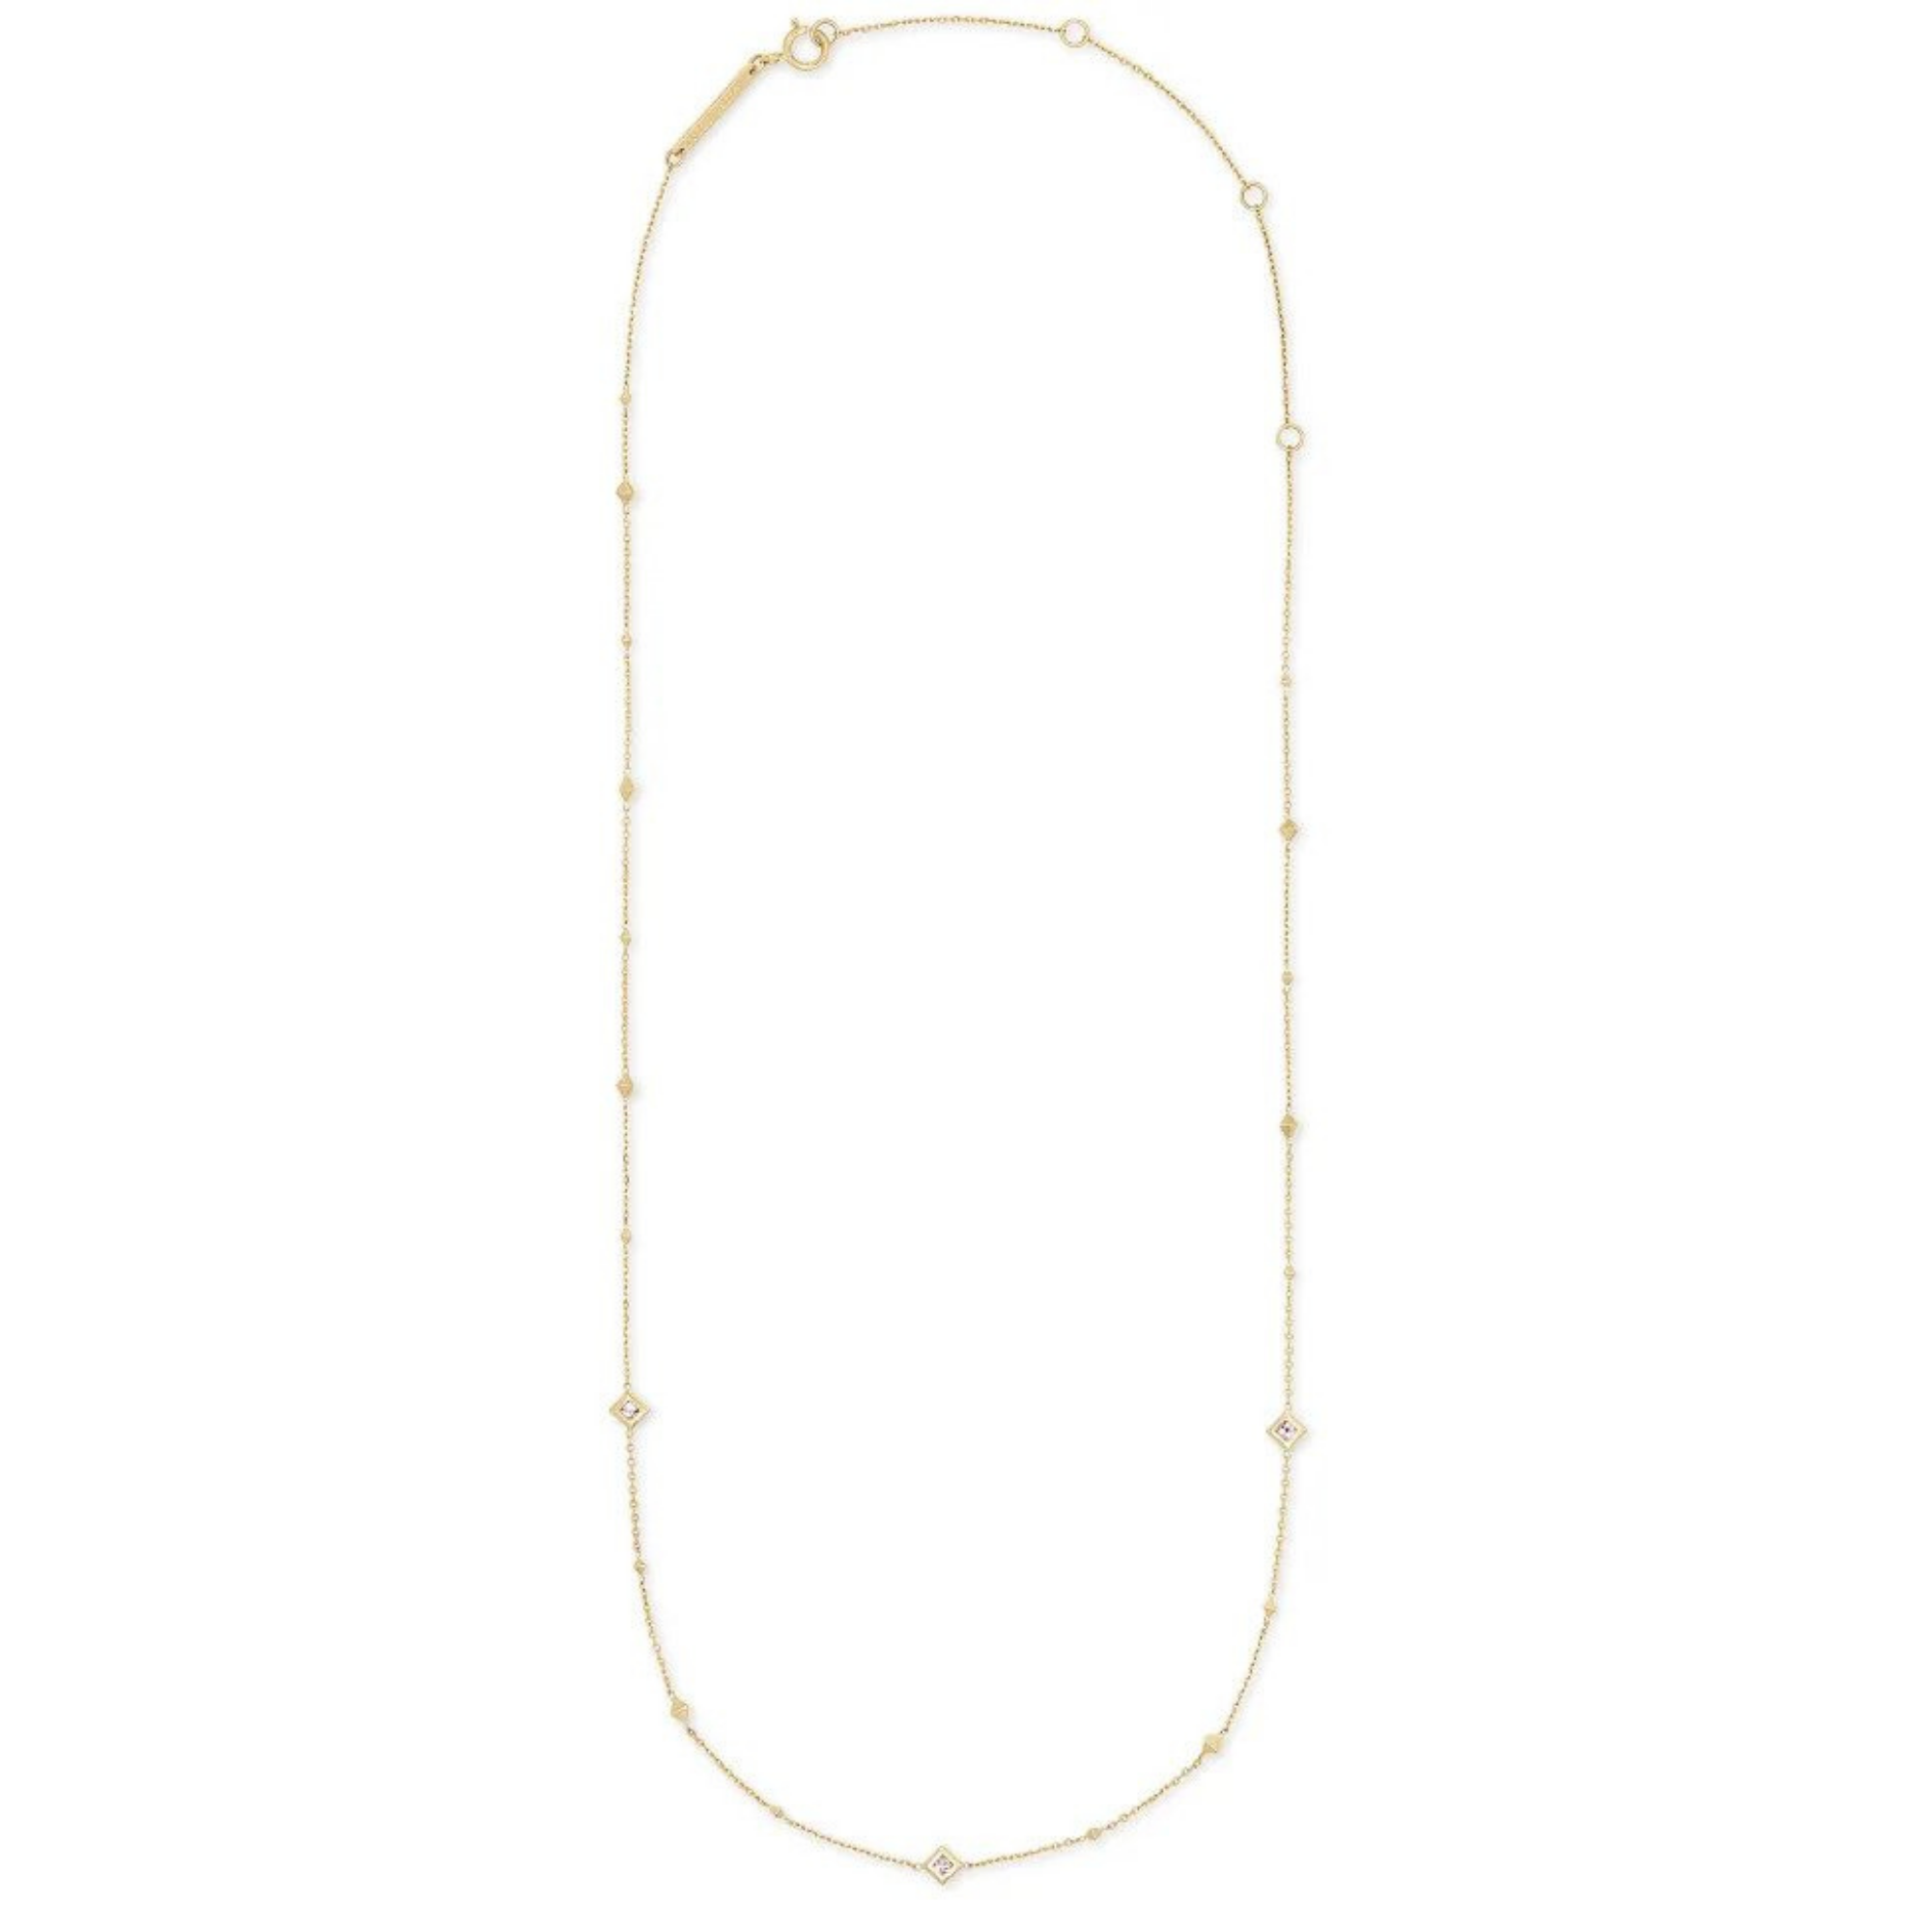 Kendra Scott Michelle 14K Yellow Gold Strand Necklace in Diamond, $700